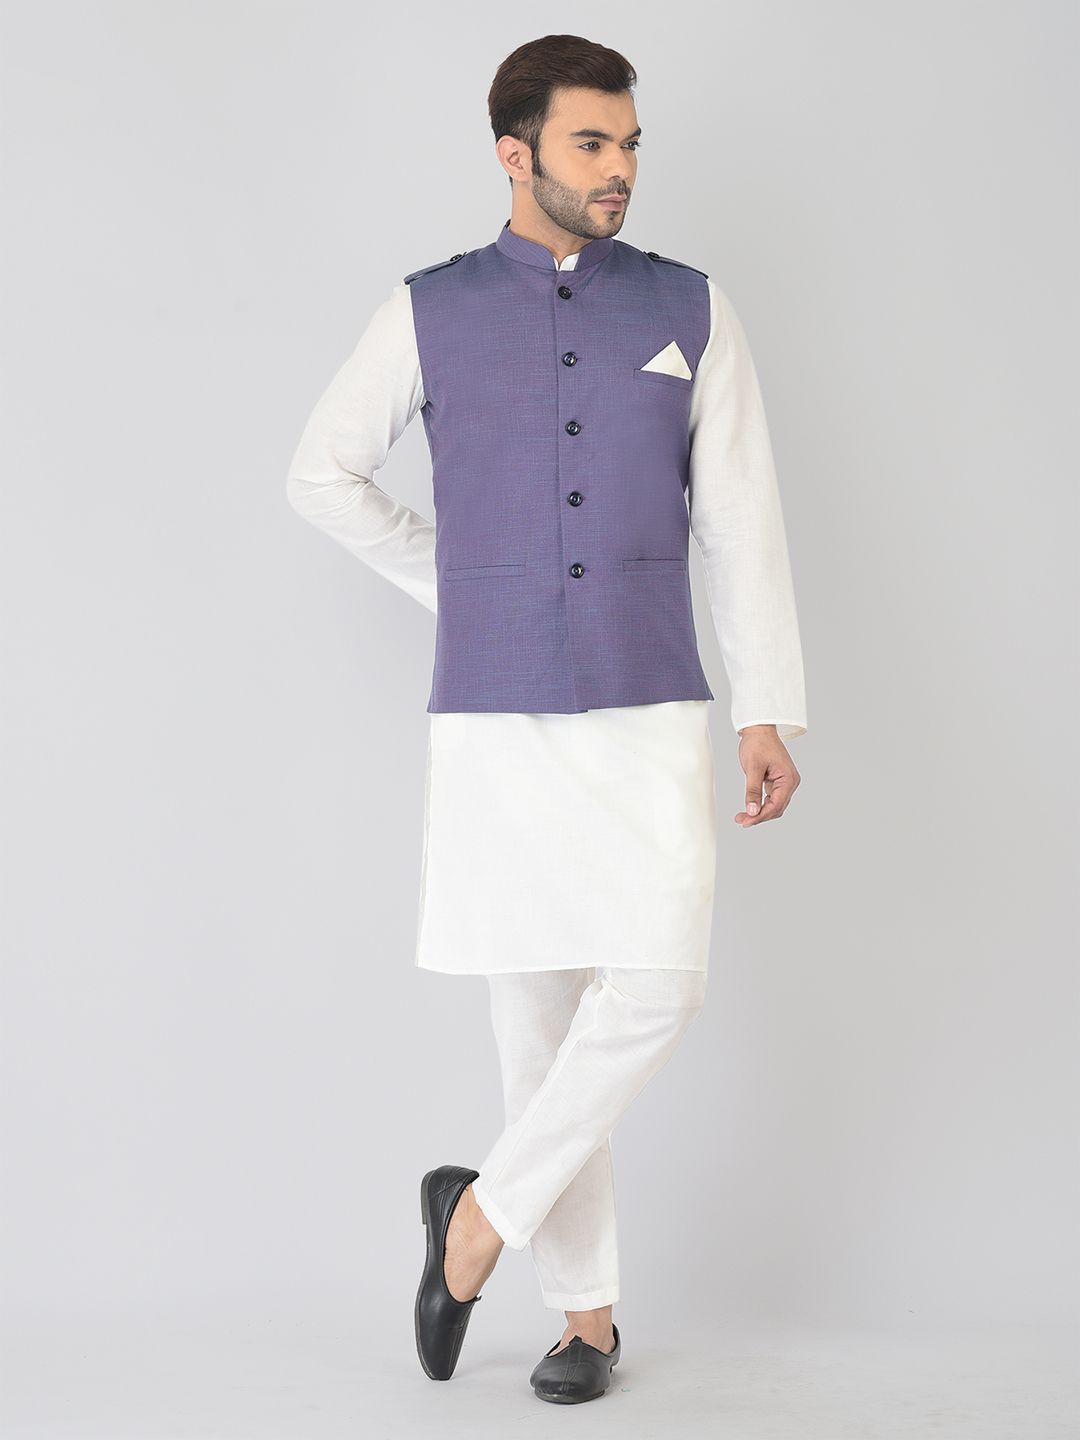 Buy Men Khaki Print Regular Fit Party Nehru Jacket Online  682008  Peter  England